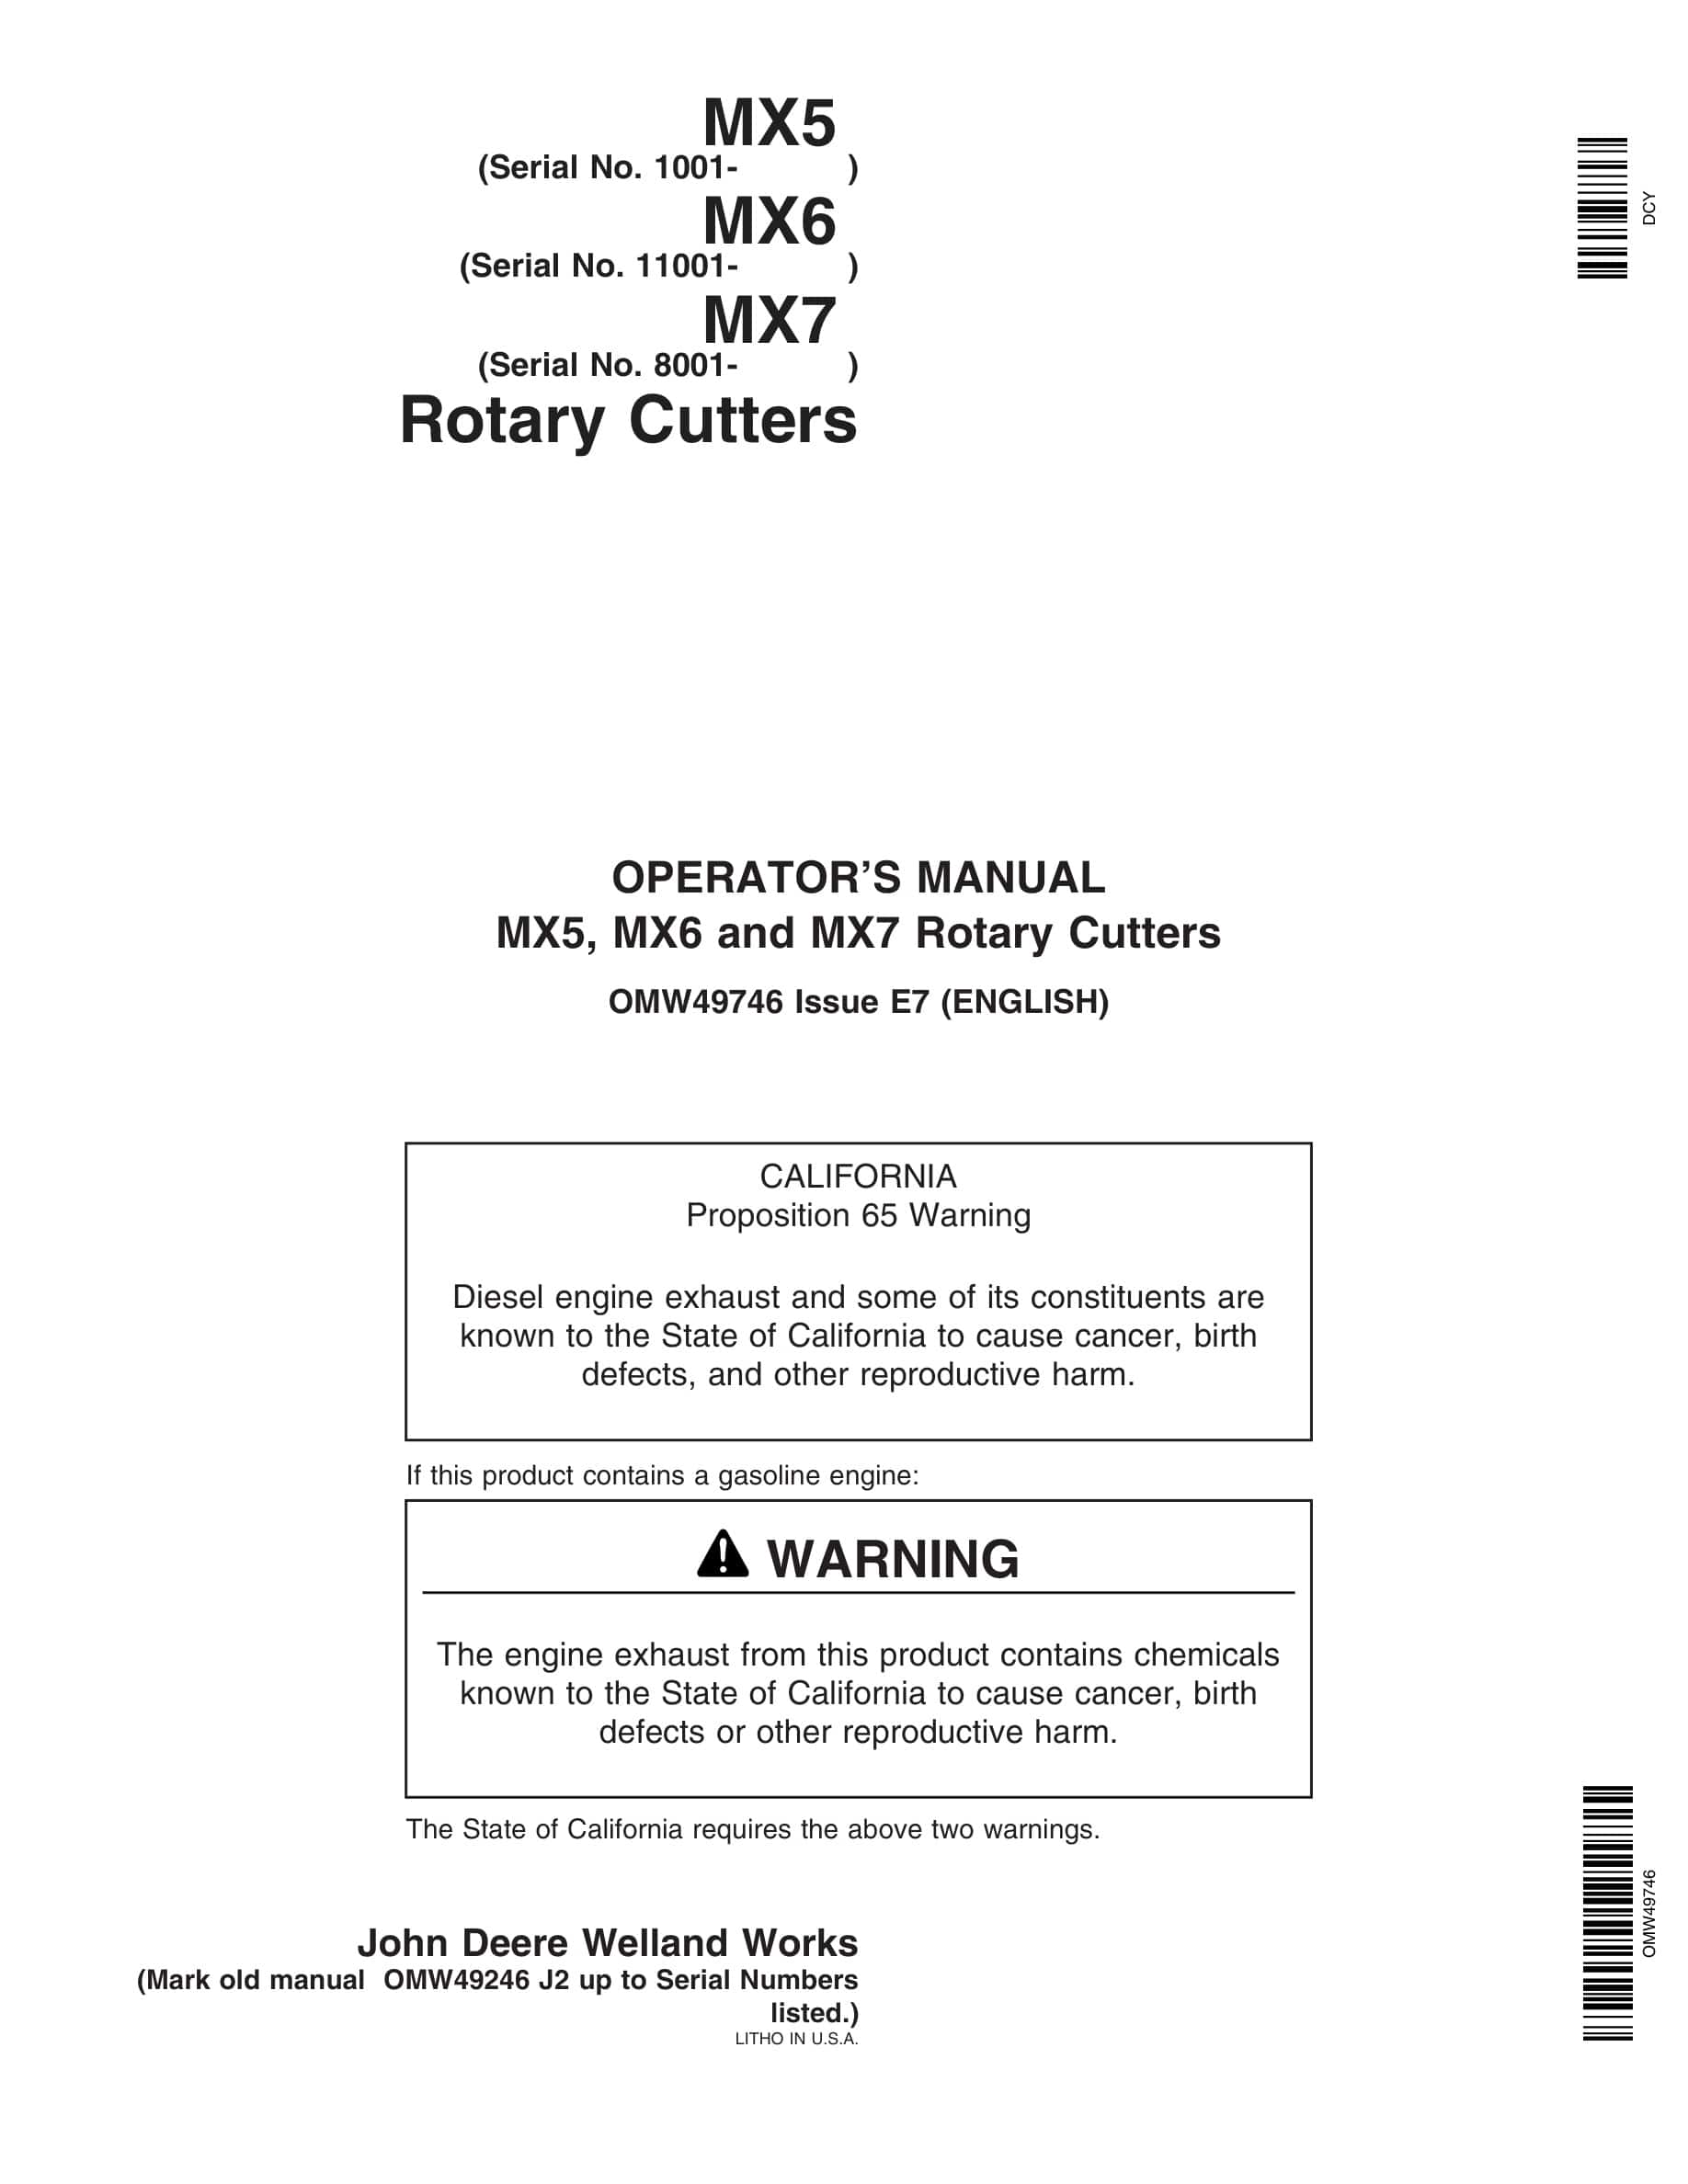 John Deere MX5, MX6 and MX7 Rotary Cutter Operator Manual OMW49746-1